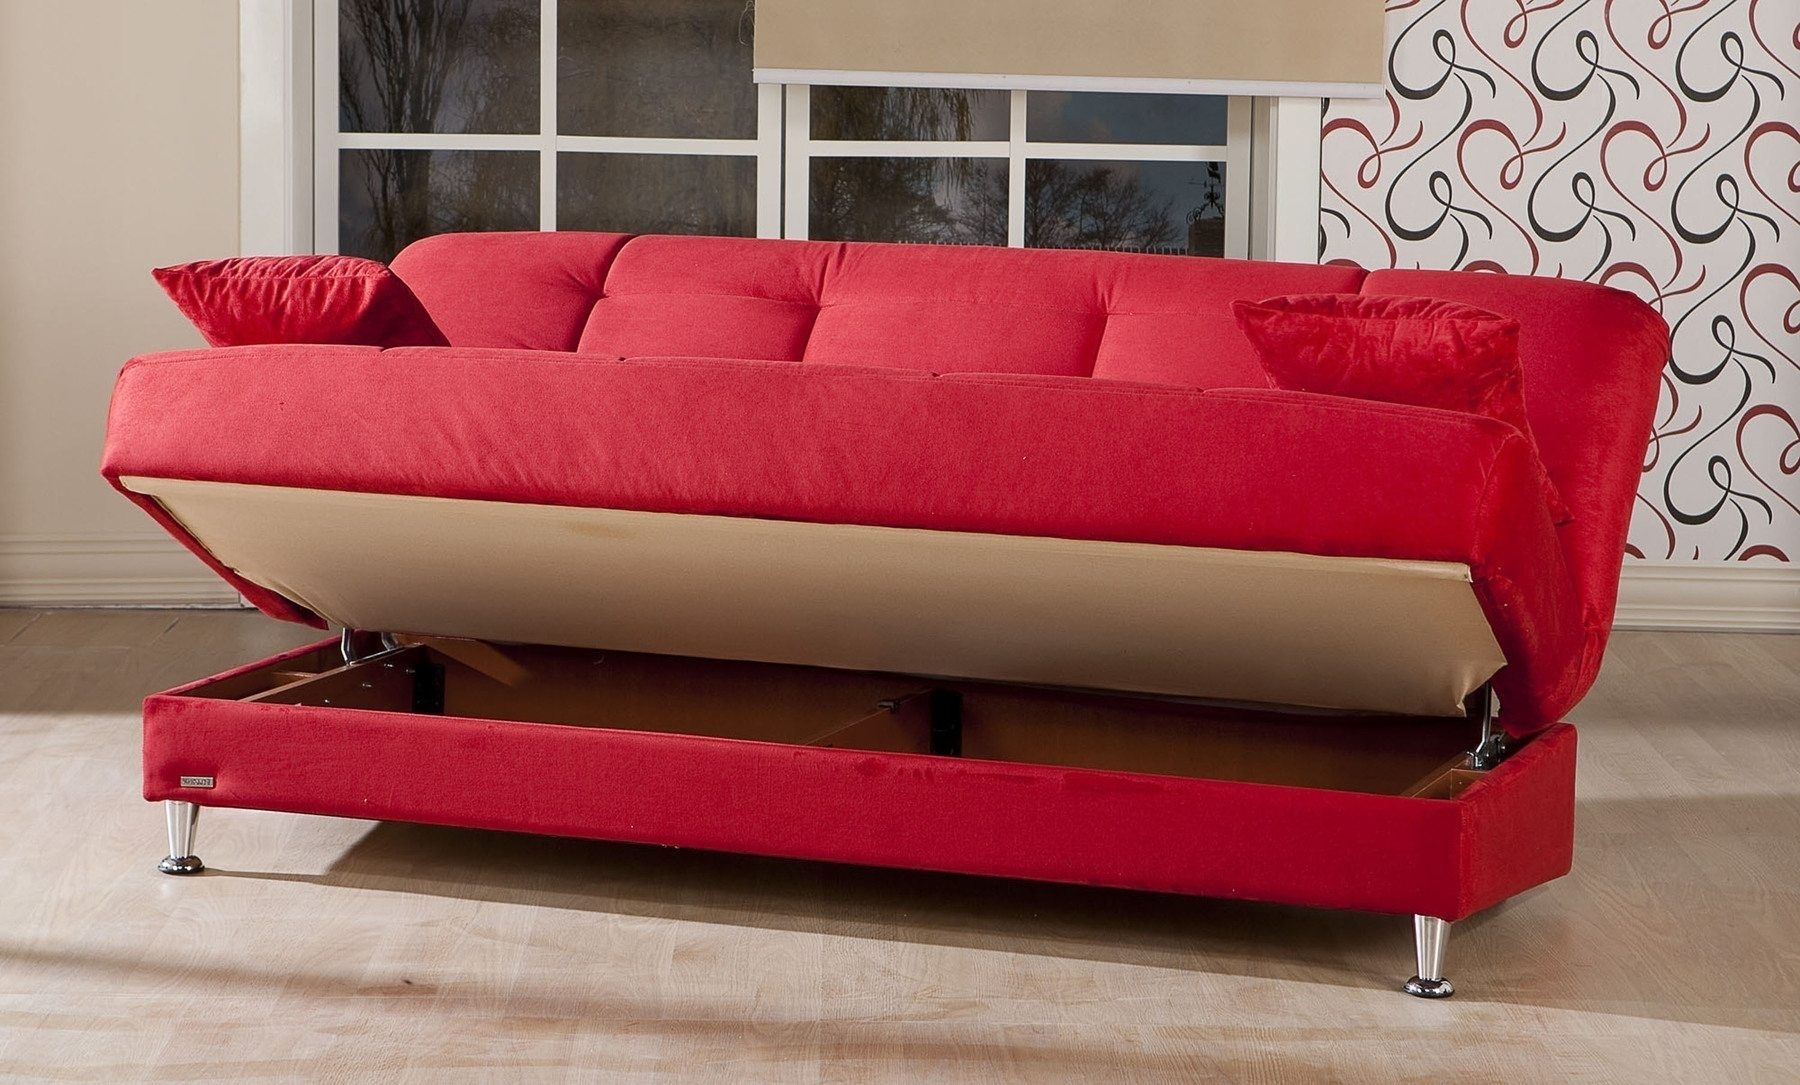 Red Sleeper Sofa Large Kitchen & Dining Mattresses Dressers 3em 27 Regarding Red Sleeper Sofas (Photo 4 of 10)